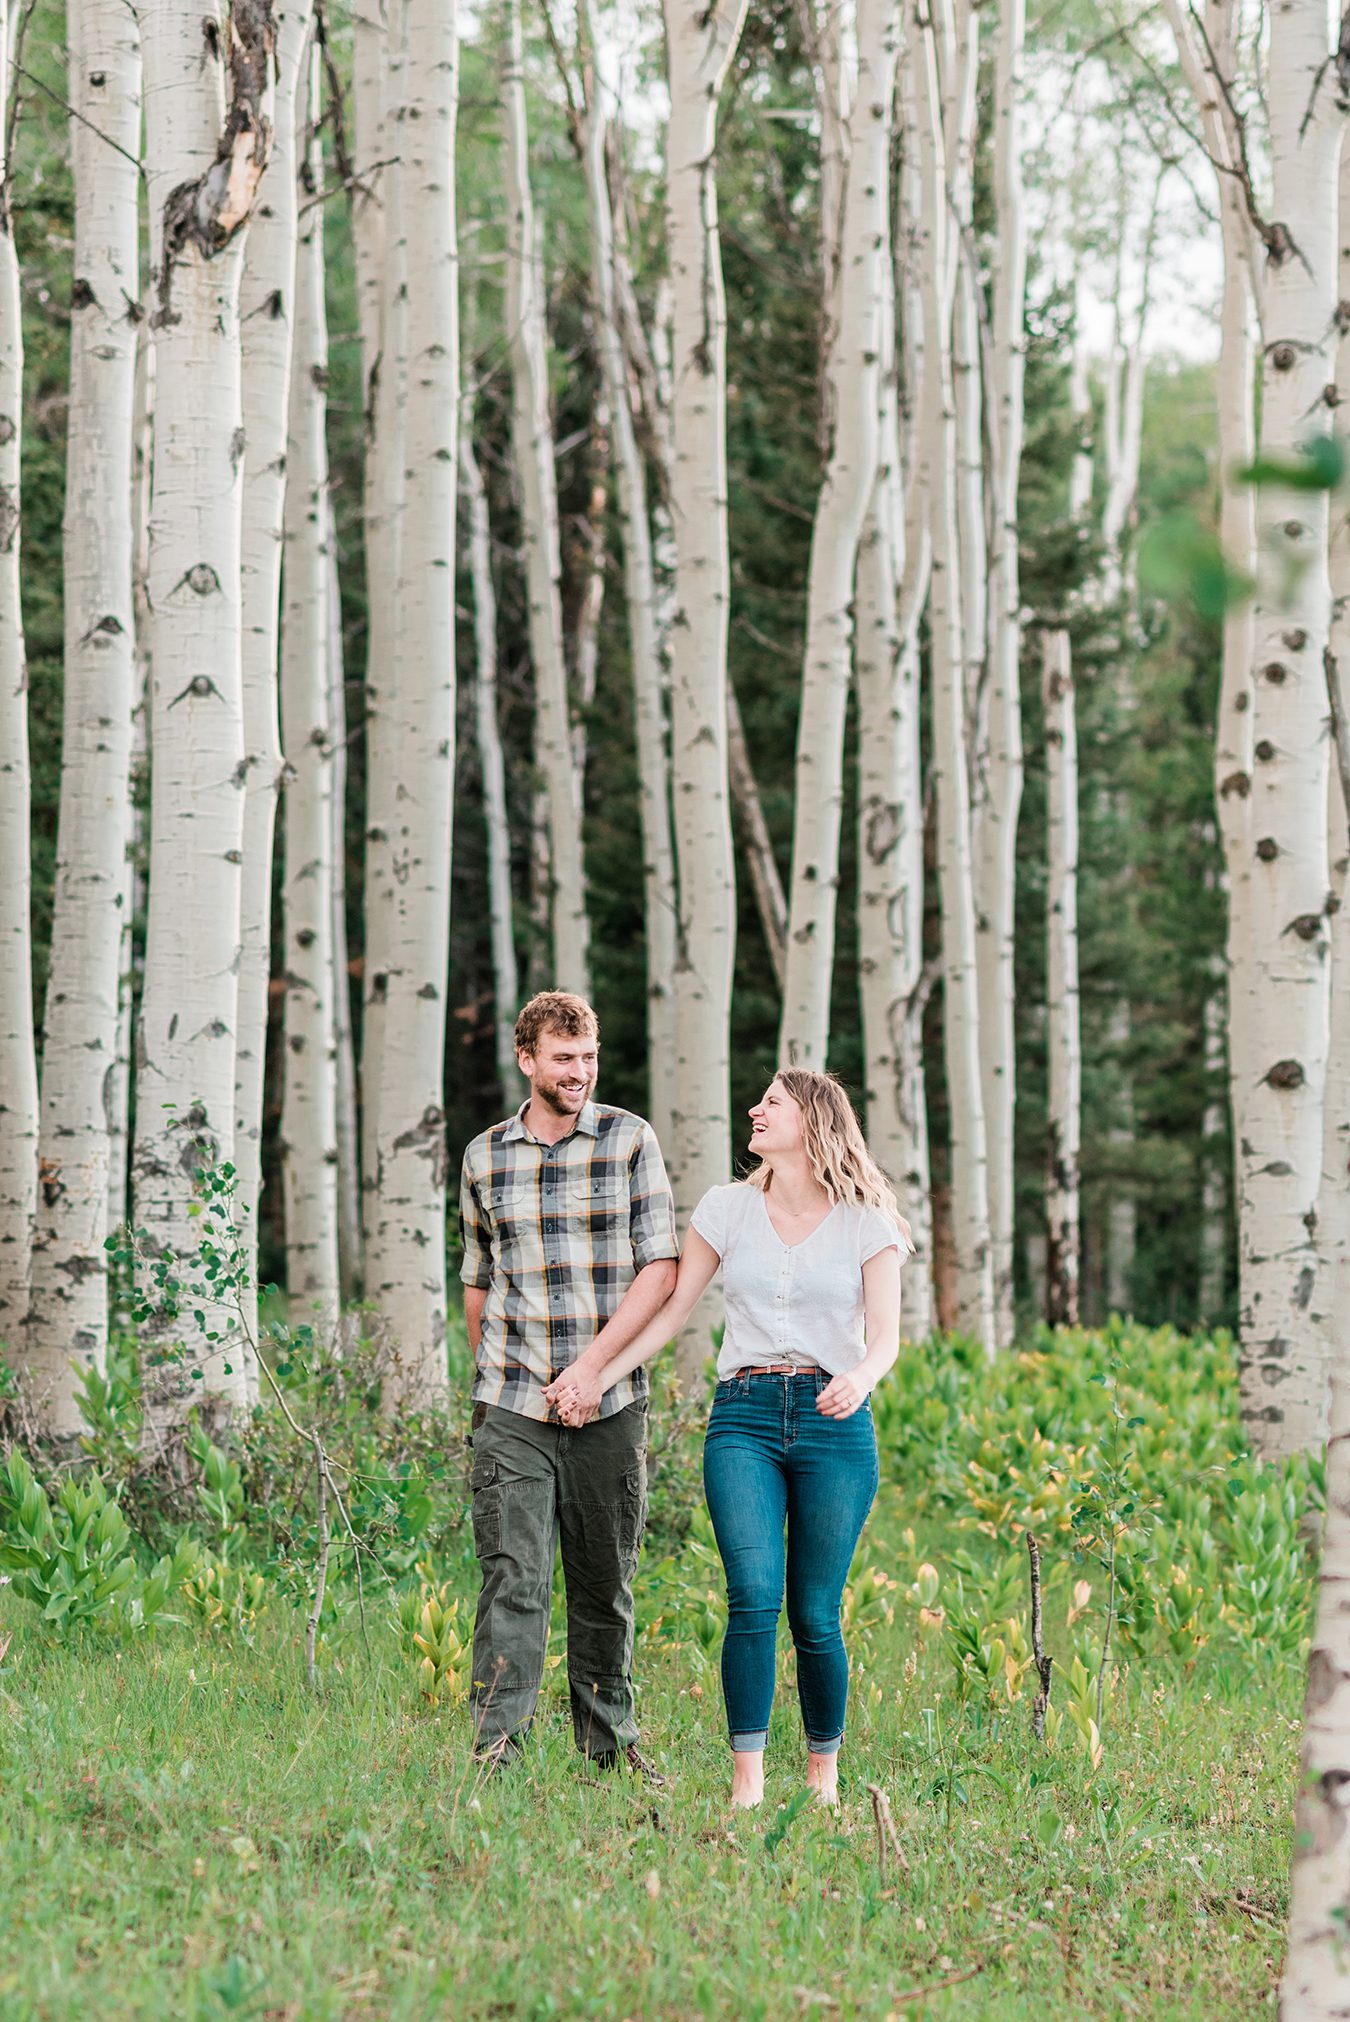 Annie & Taylorwalk through an Aspen glen for their Glenwood Springs Engagement Photos